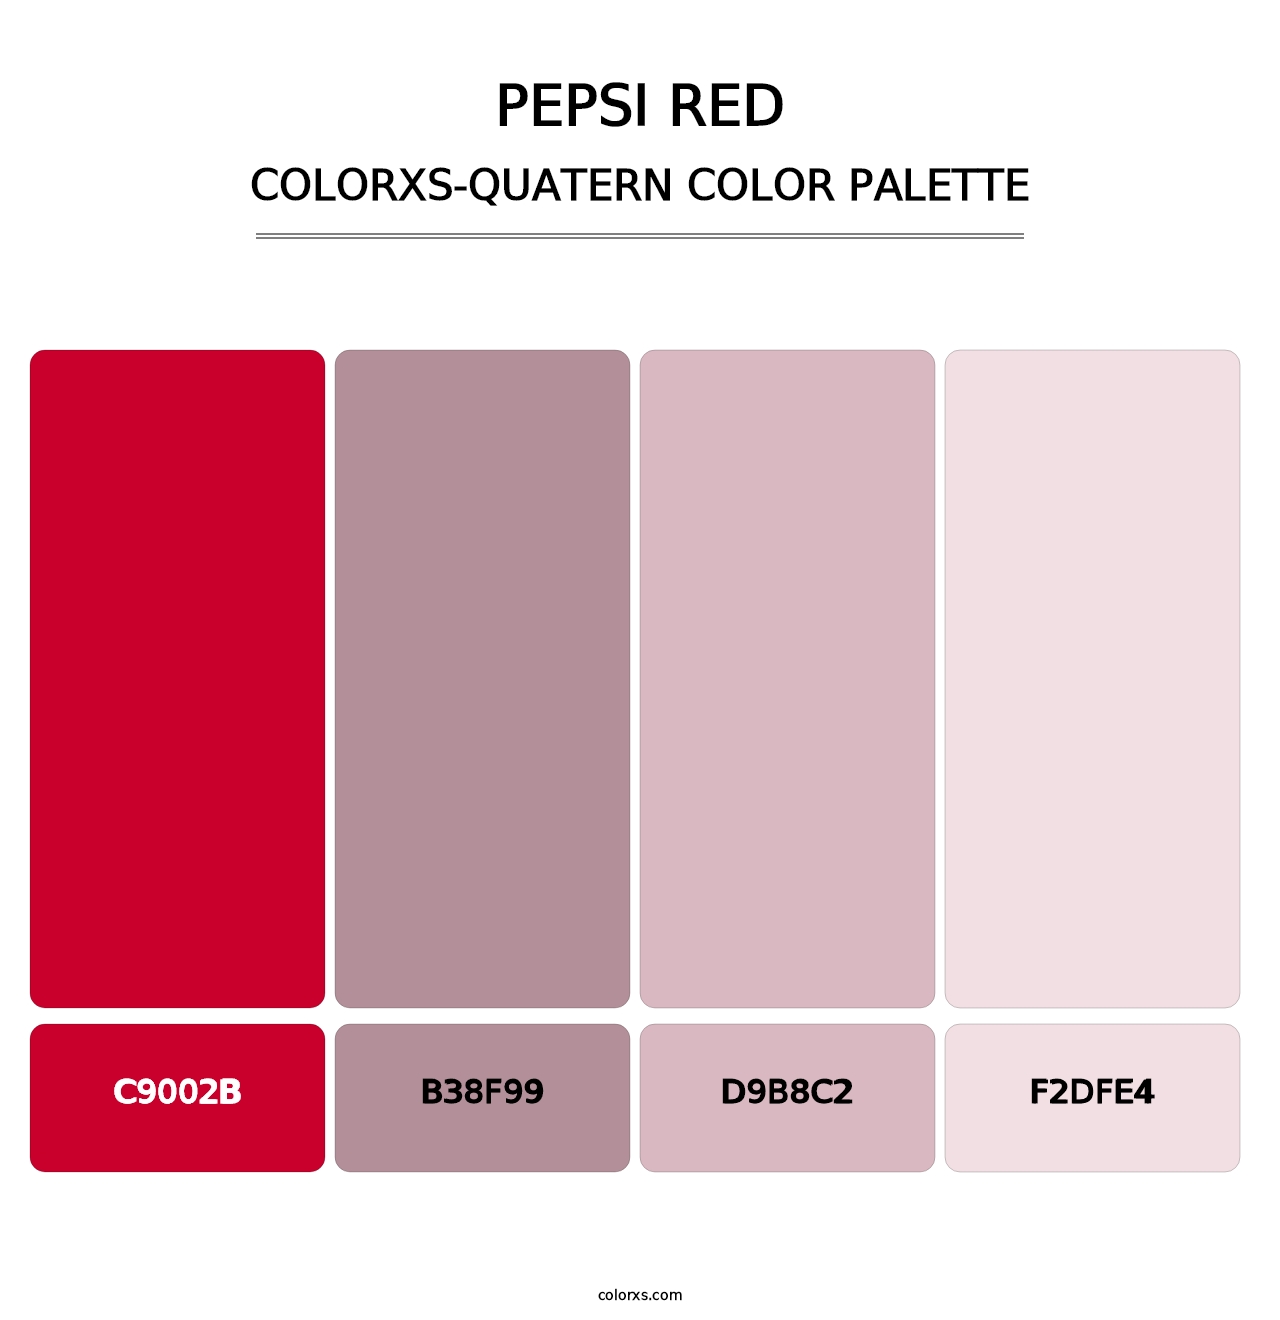 Pepsi Red - Colorxs Quatern Palette